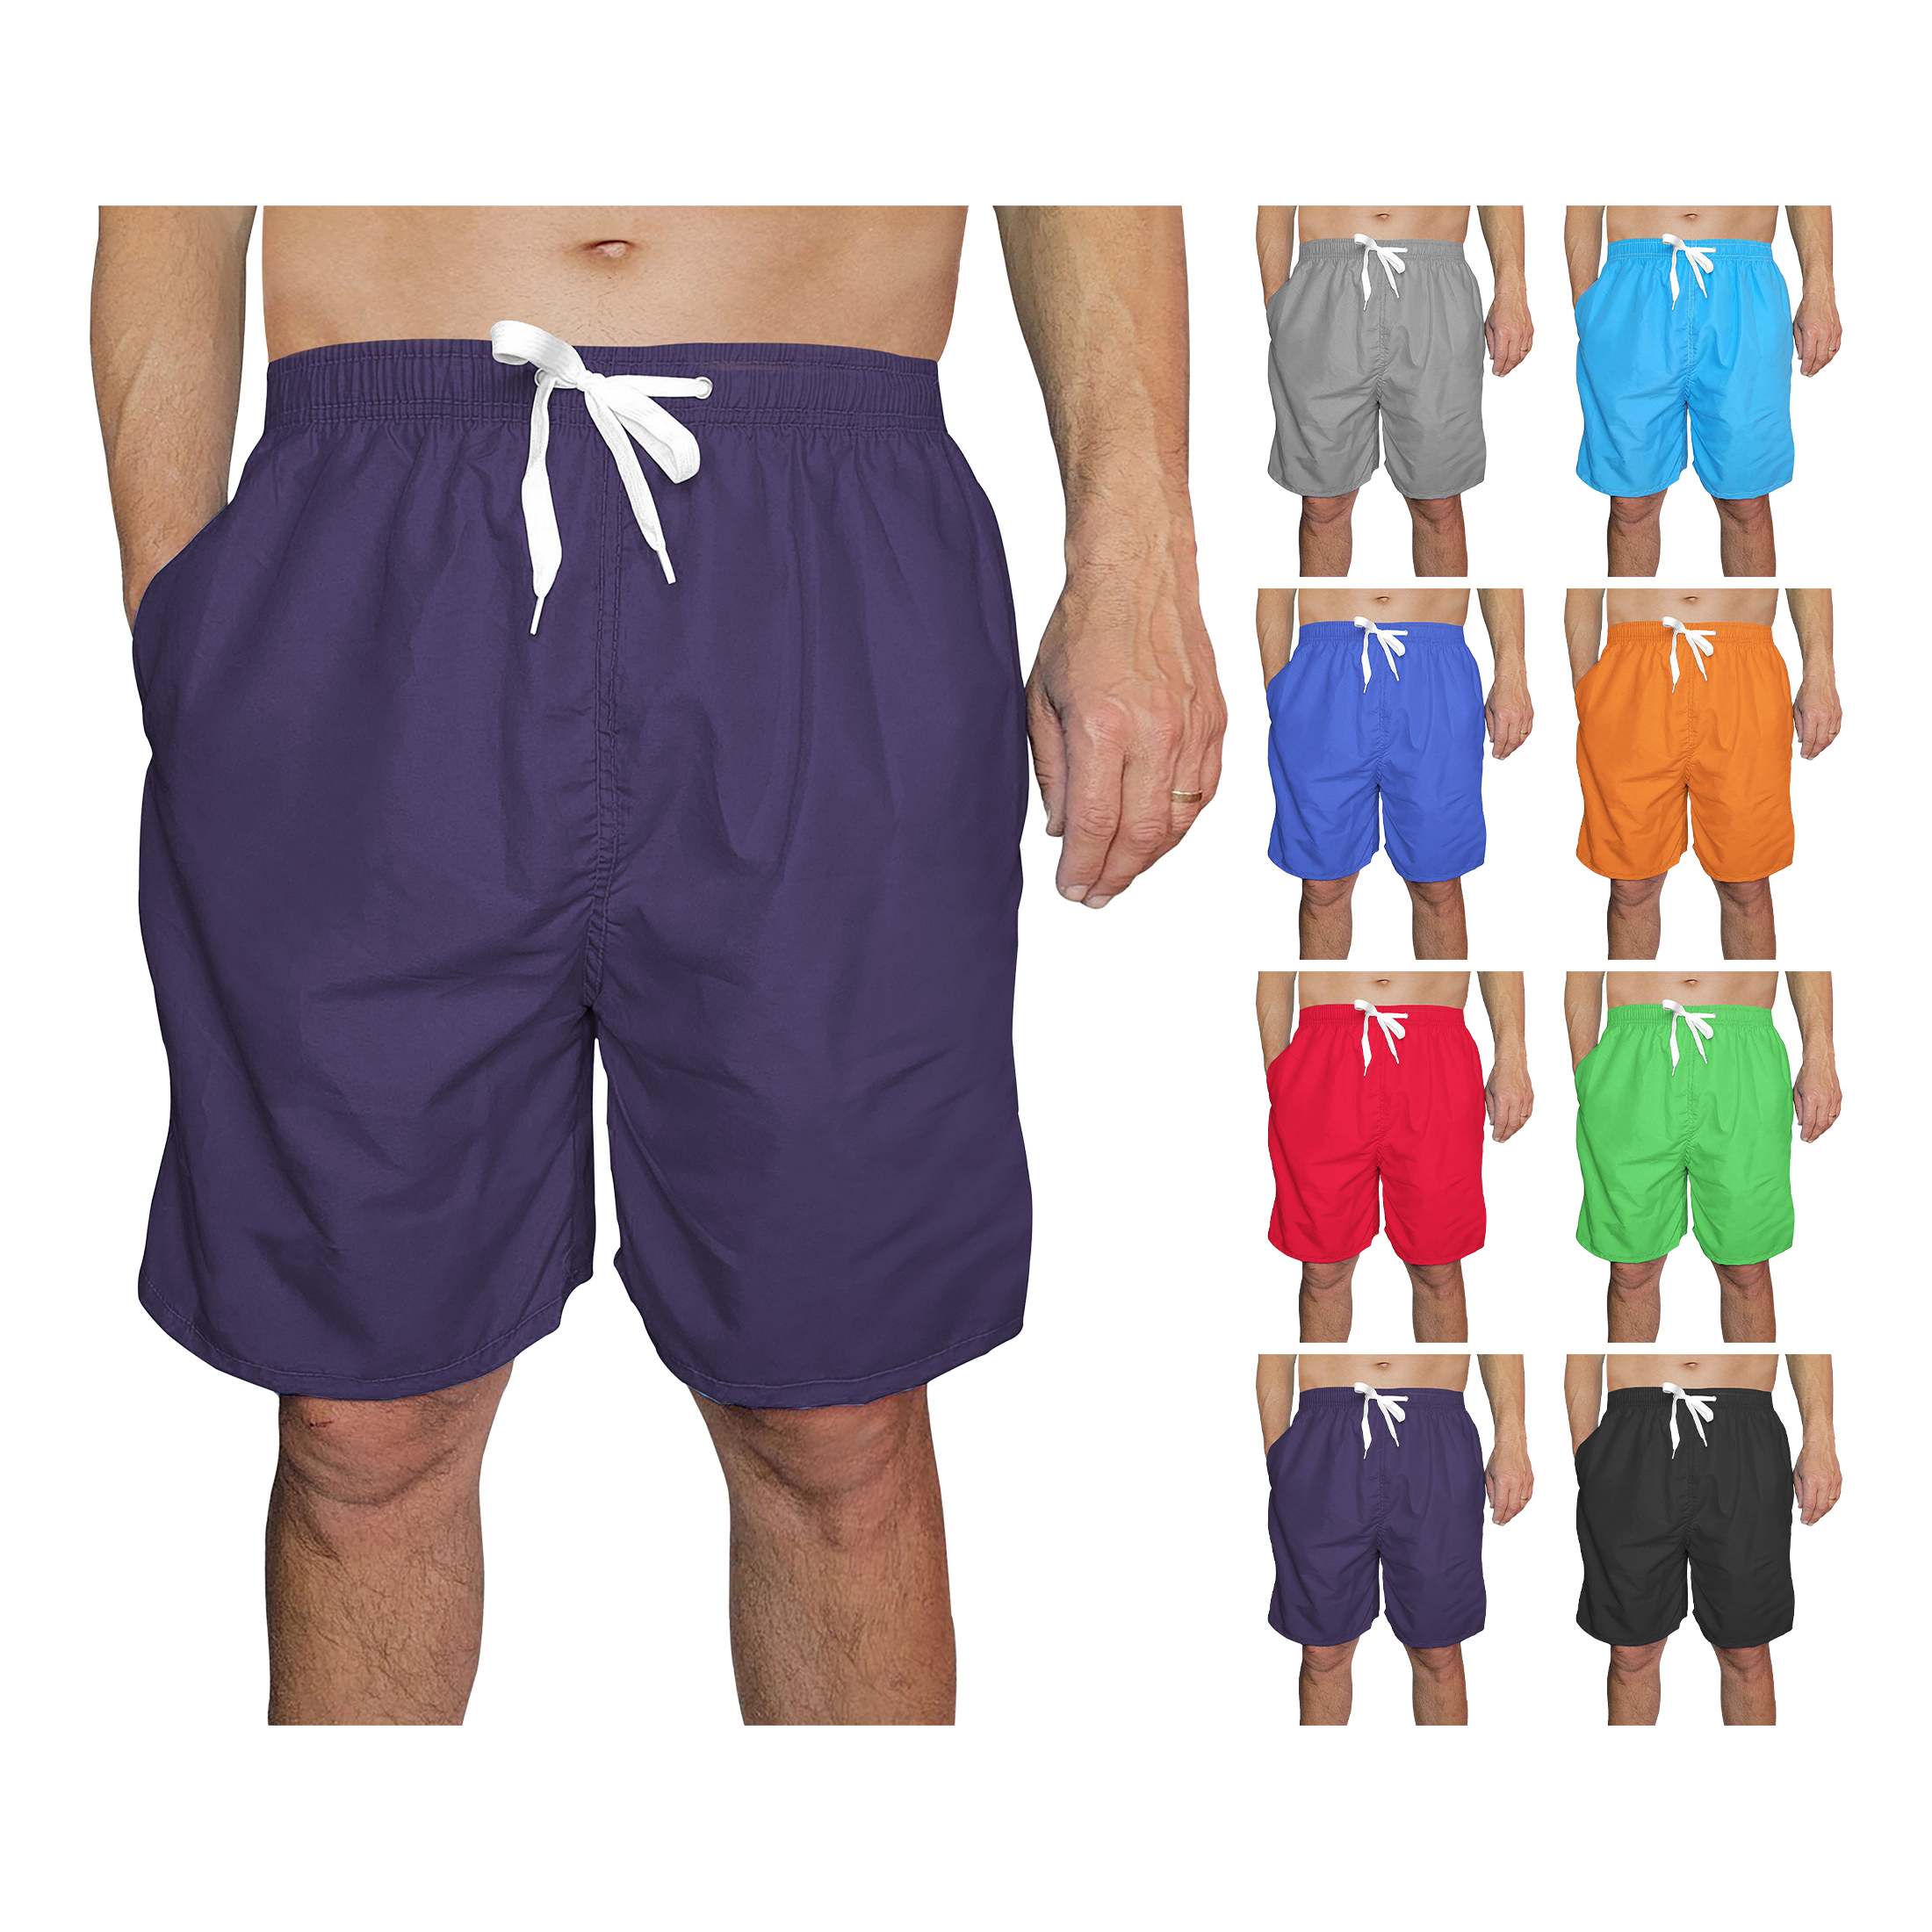 5-Pack Men's Quick Dry Swim Trunks With Pockets Solid Bathing Beachwear Flex Board Shorts - S